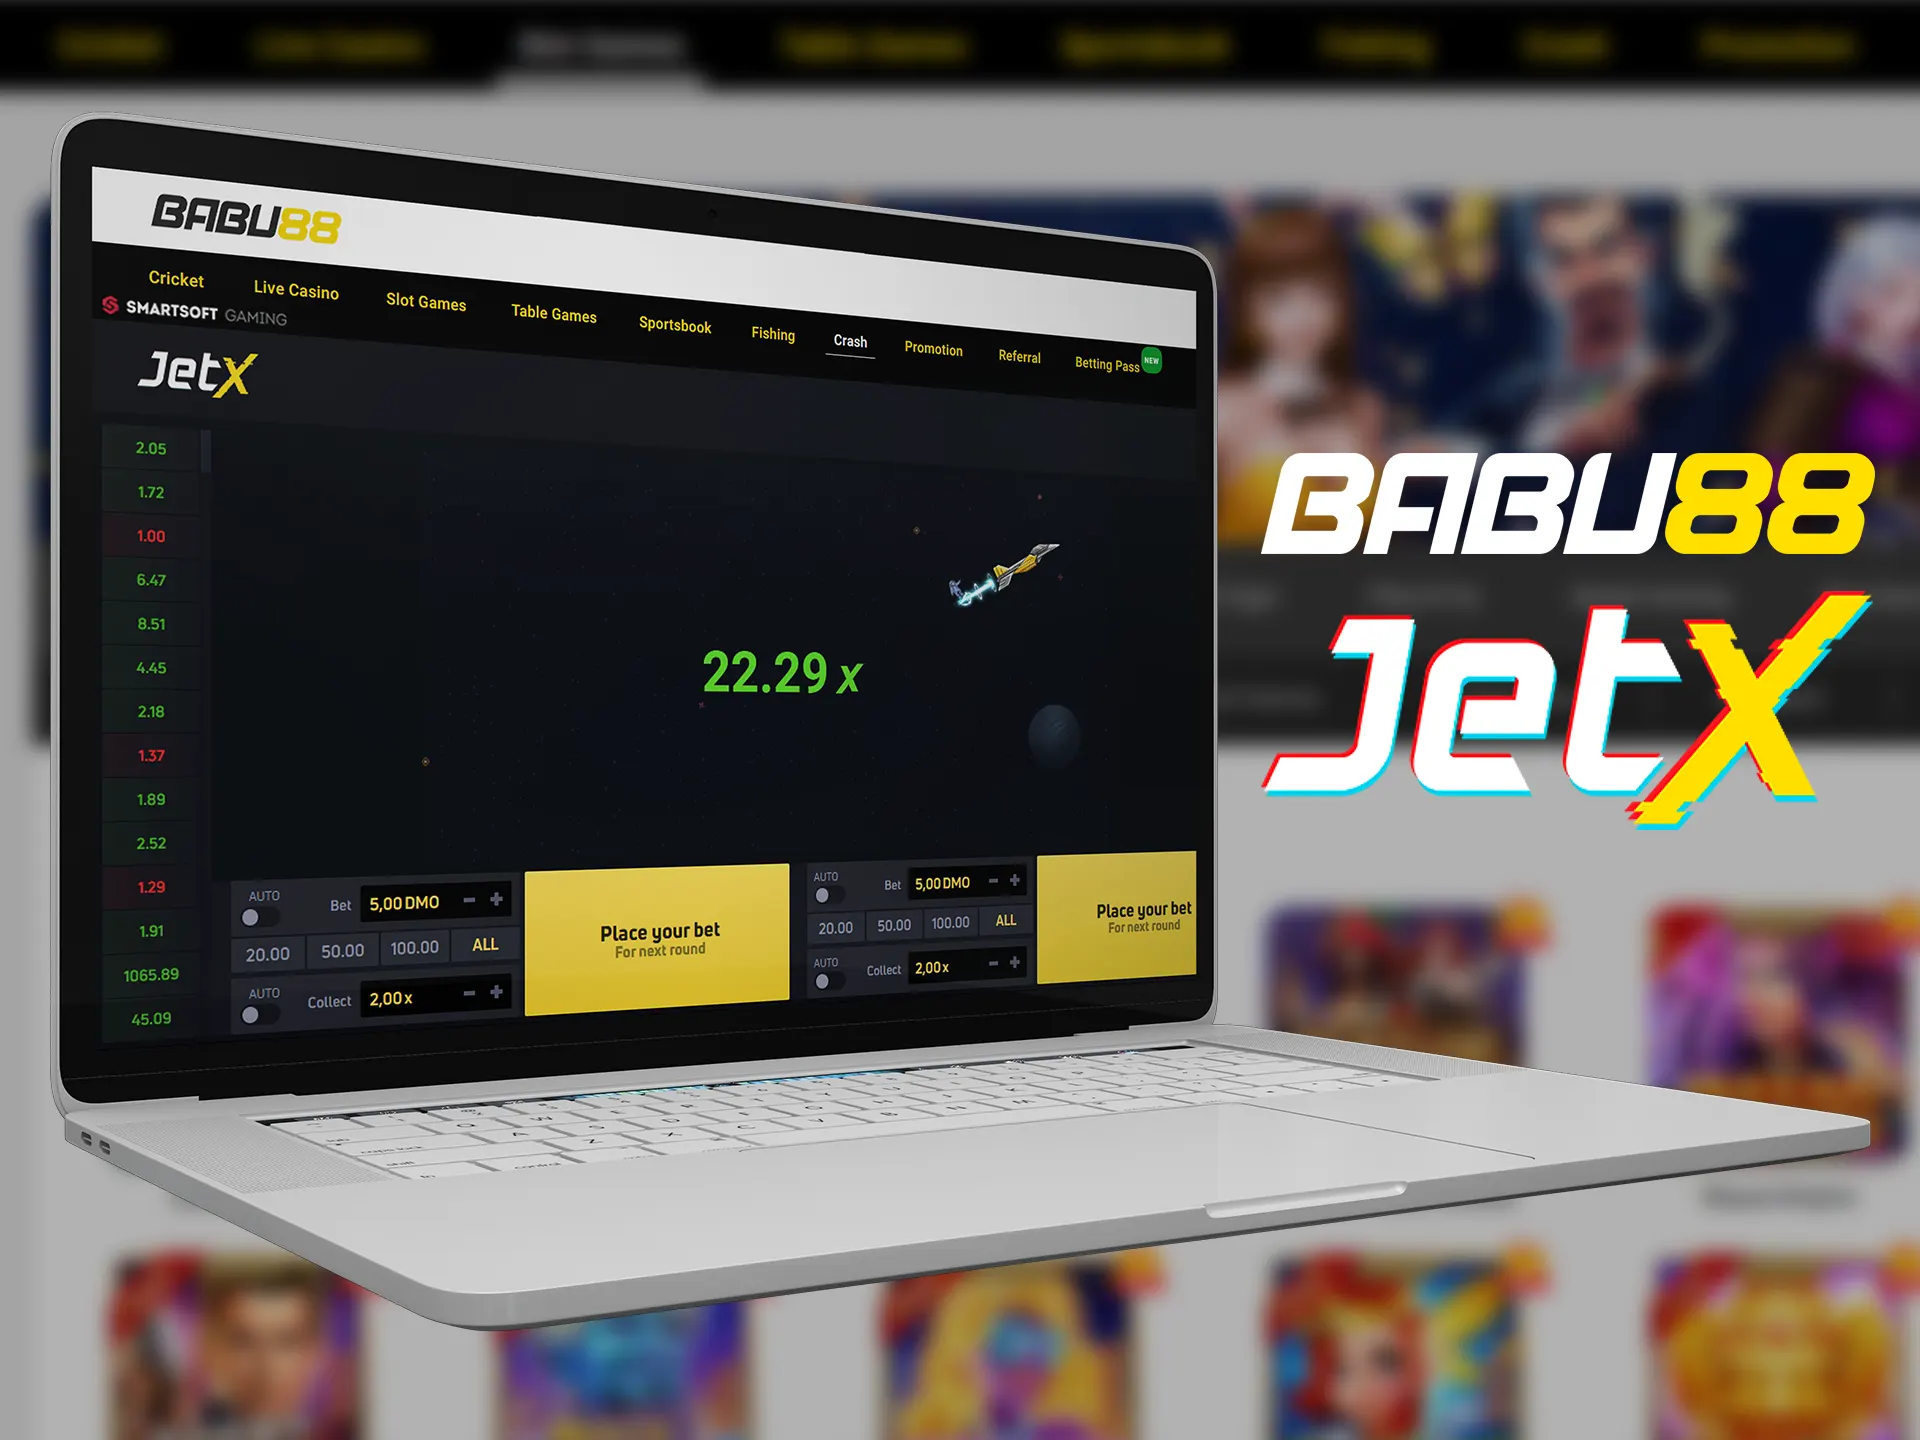 Win money by playing JetX at the Babu88.